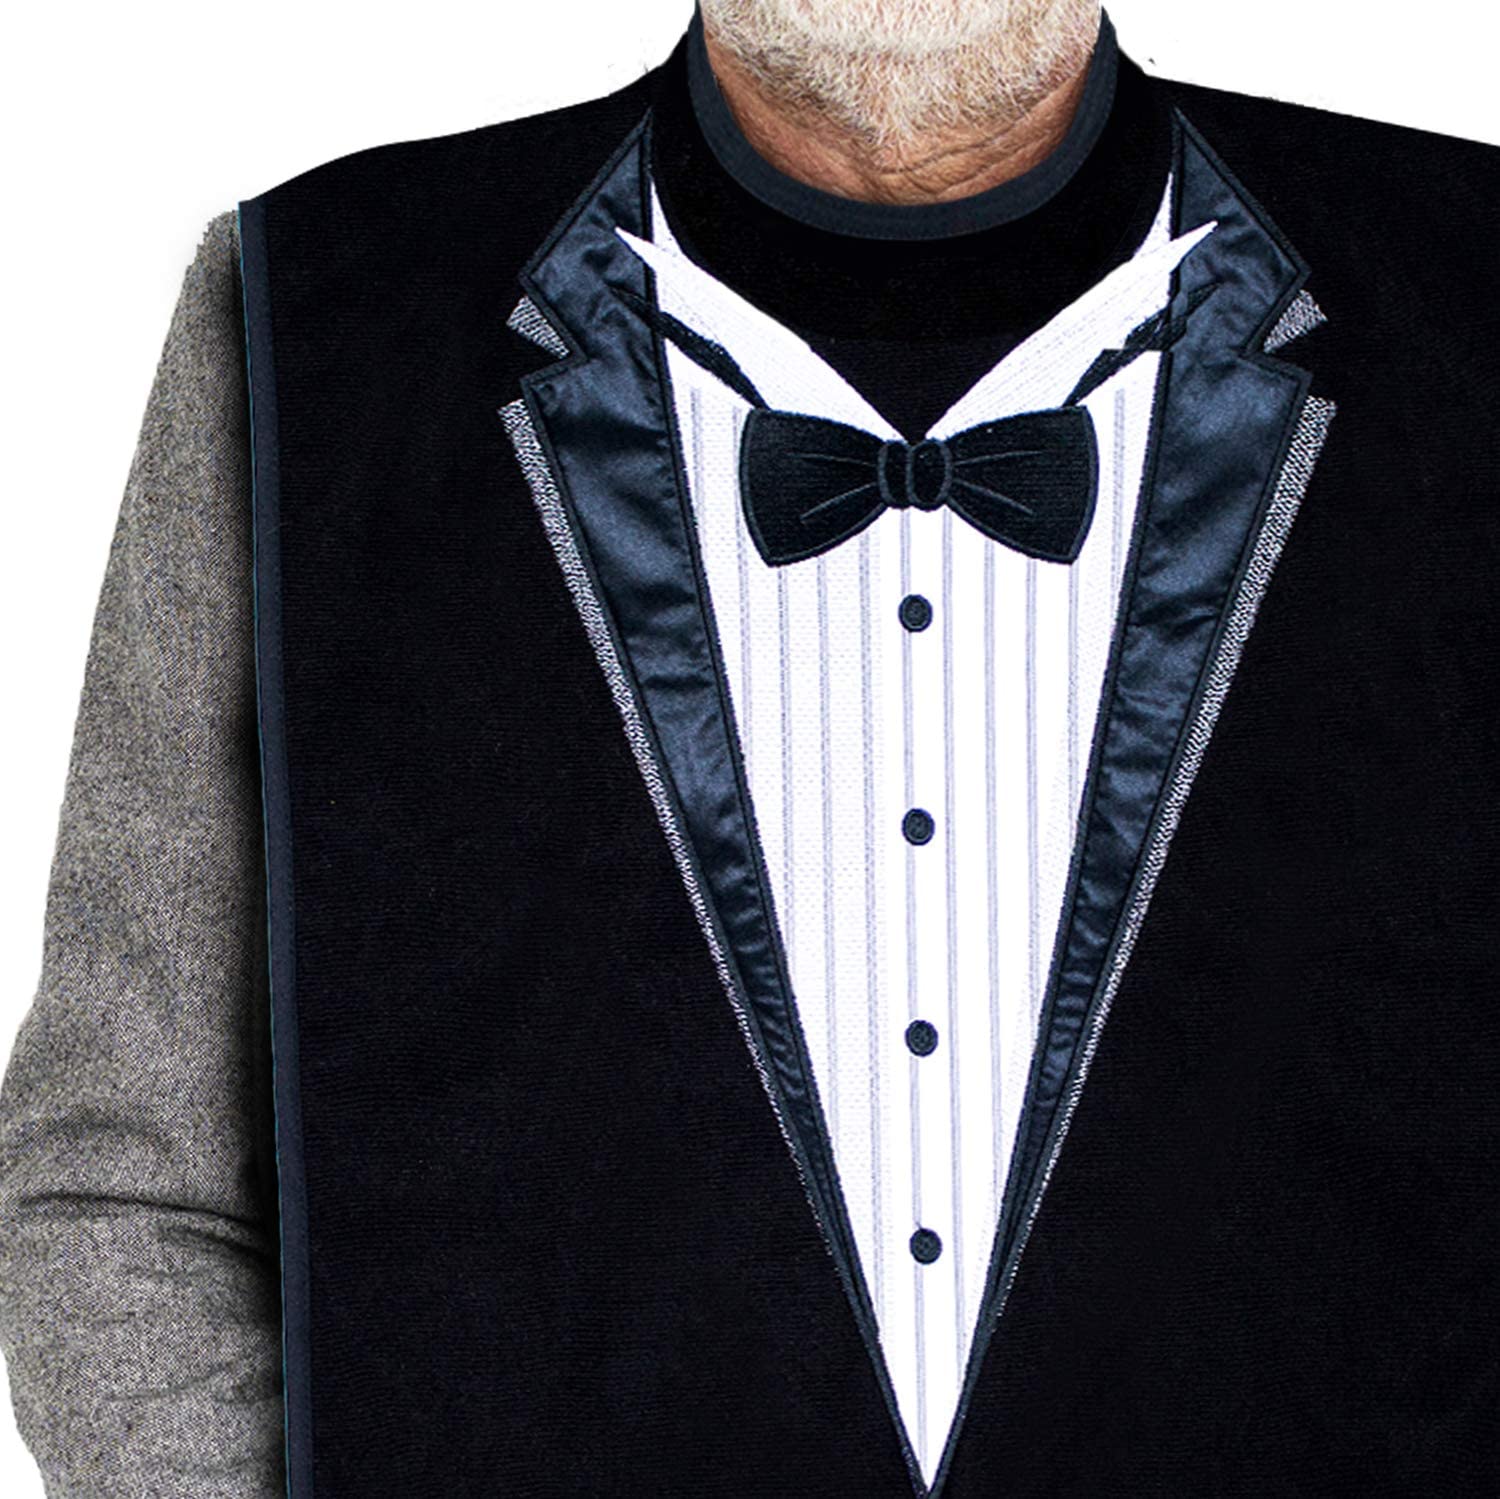 Men's Dress 'n Dine™ Adult Bib with Tuxedo - Classy Pal Dress 'n Dine Adult Bibs